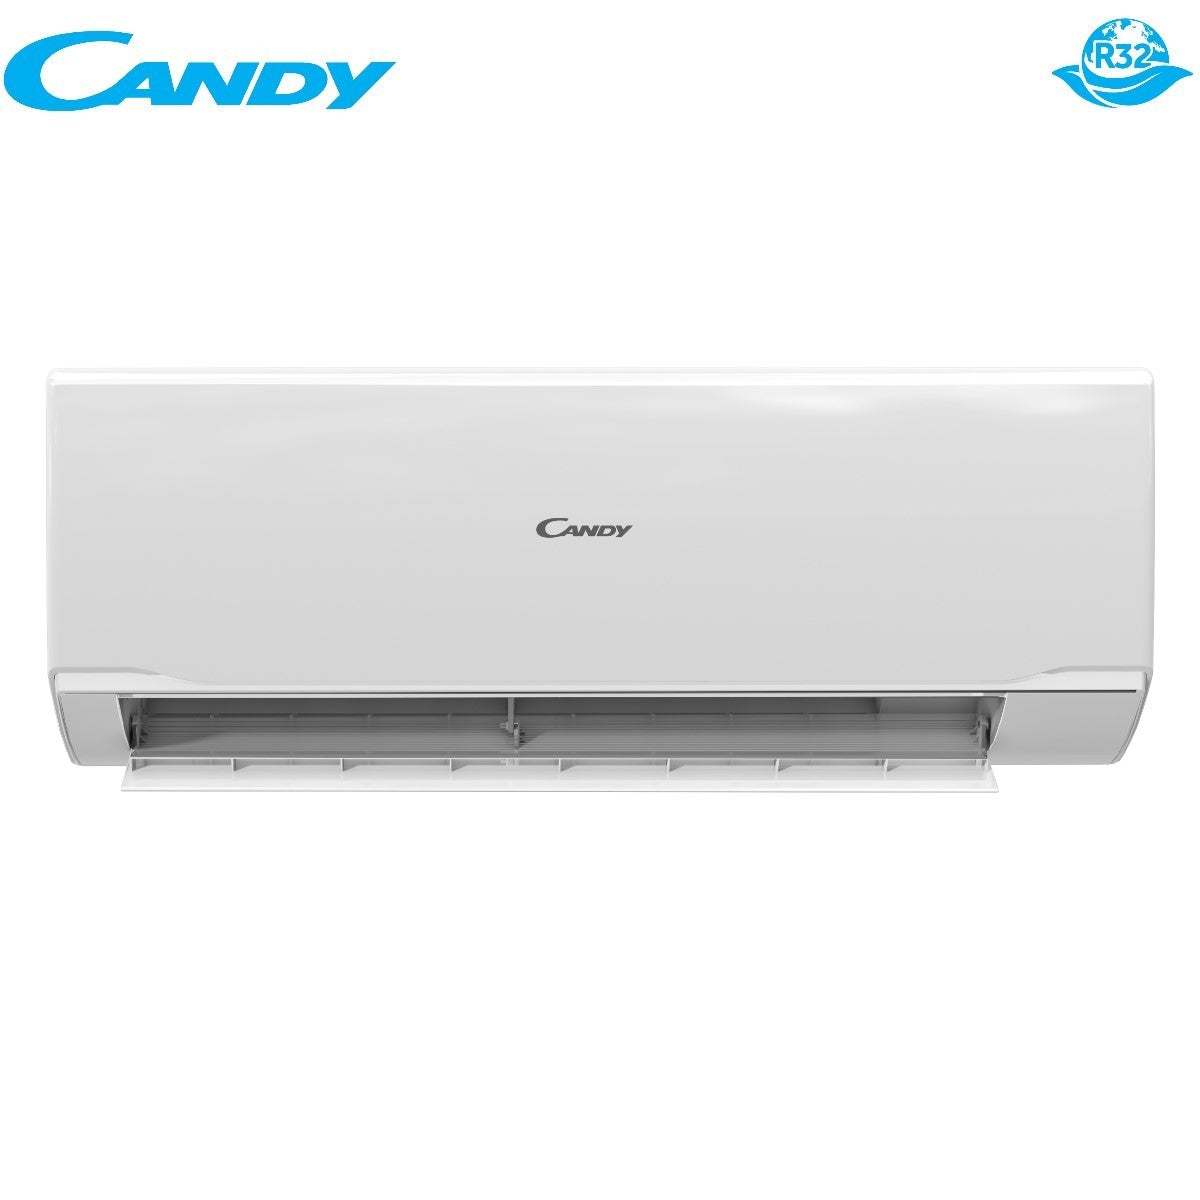 immagine-2-candy-climatizzatore-condizionatore-candy-inverter-serie-pura-12000-btu-cy-12ra-r-32-wi-fi-integrato-classe-aa